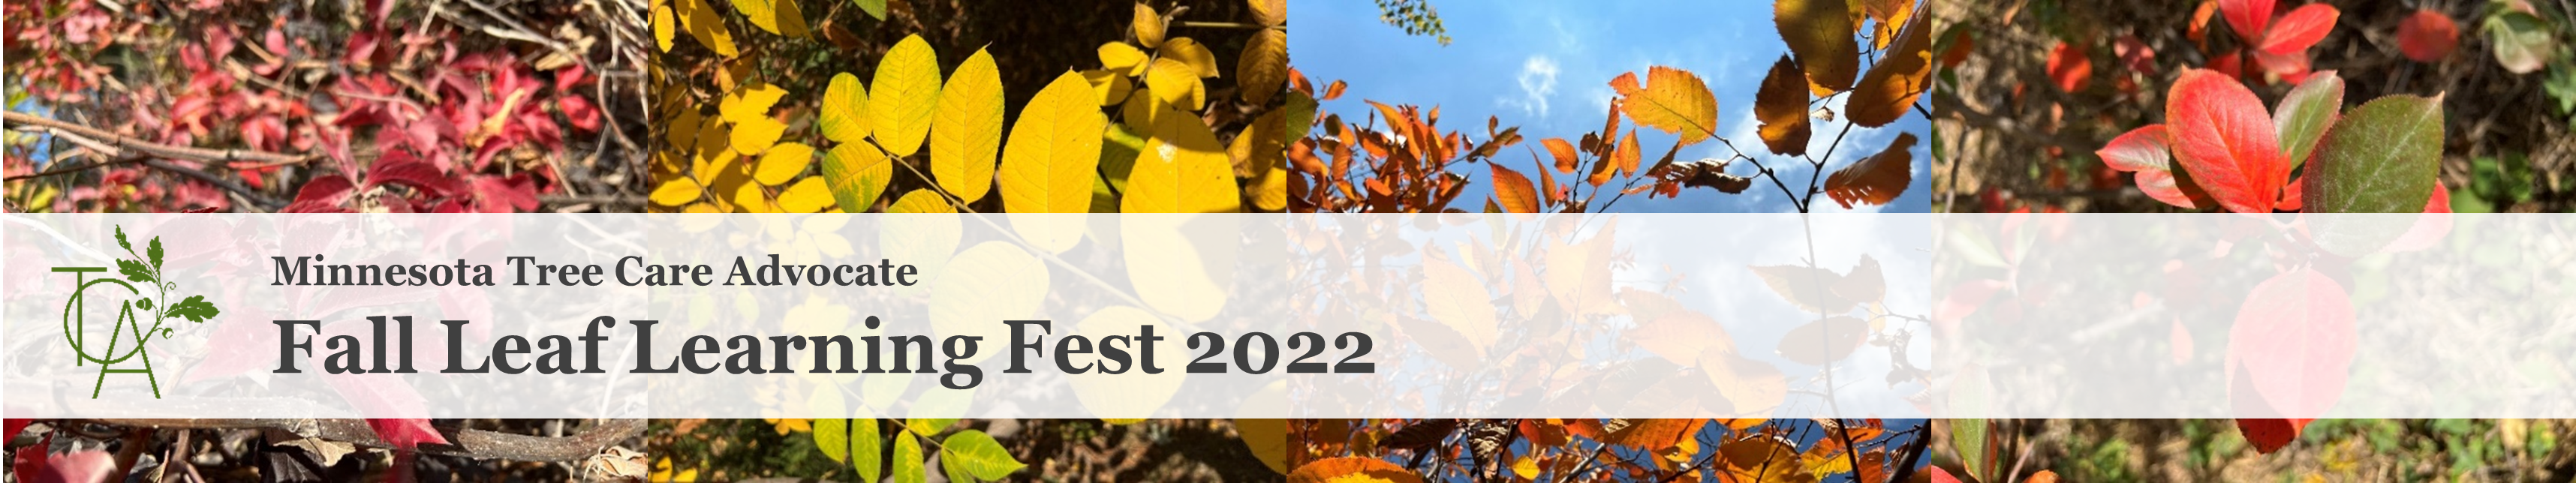 Fall Leaf Learning Fest 2022